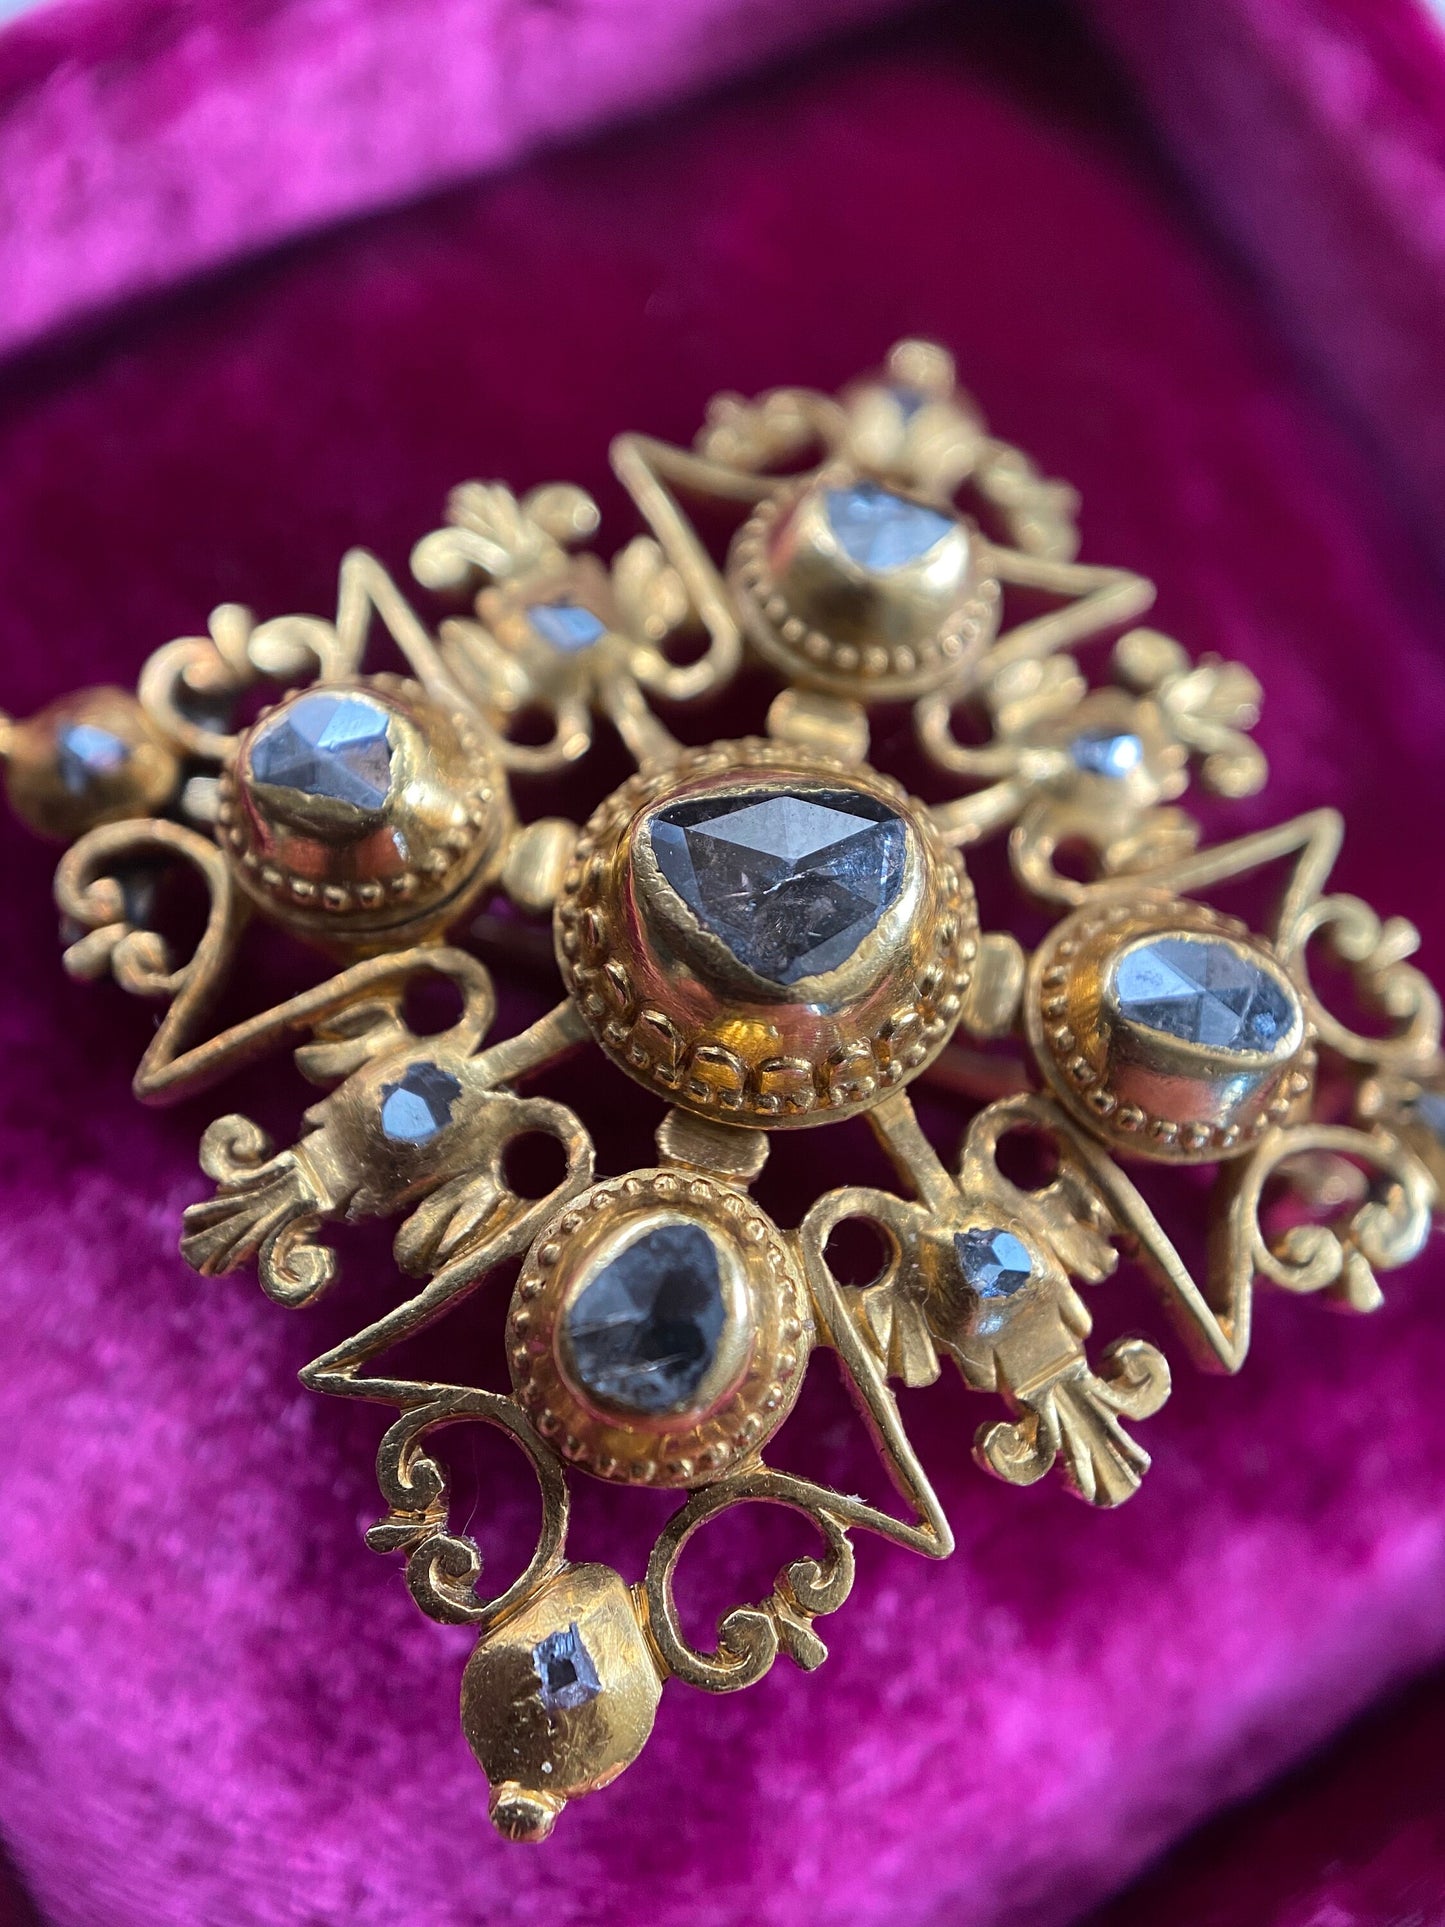 Antique Spanish High Karat Rose Cut Diamond Cross Brooch Conversion in 22k Gold c. 1750, Colonial, 1700's, Iberian, Pendant